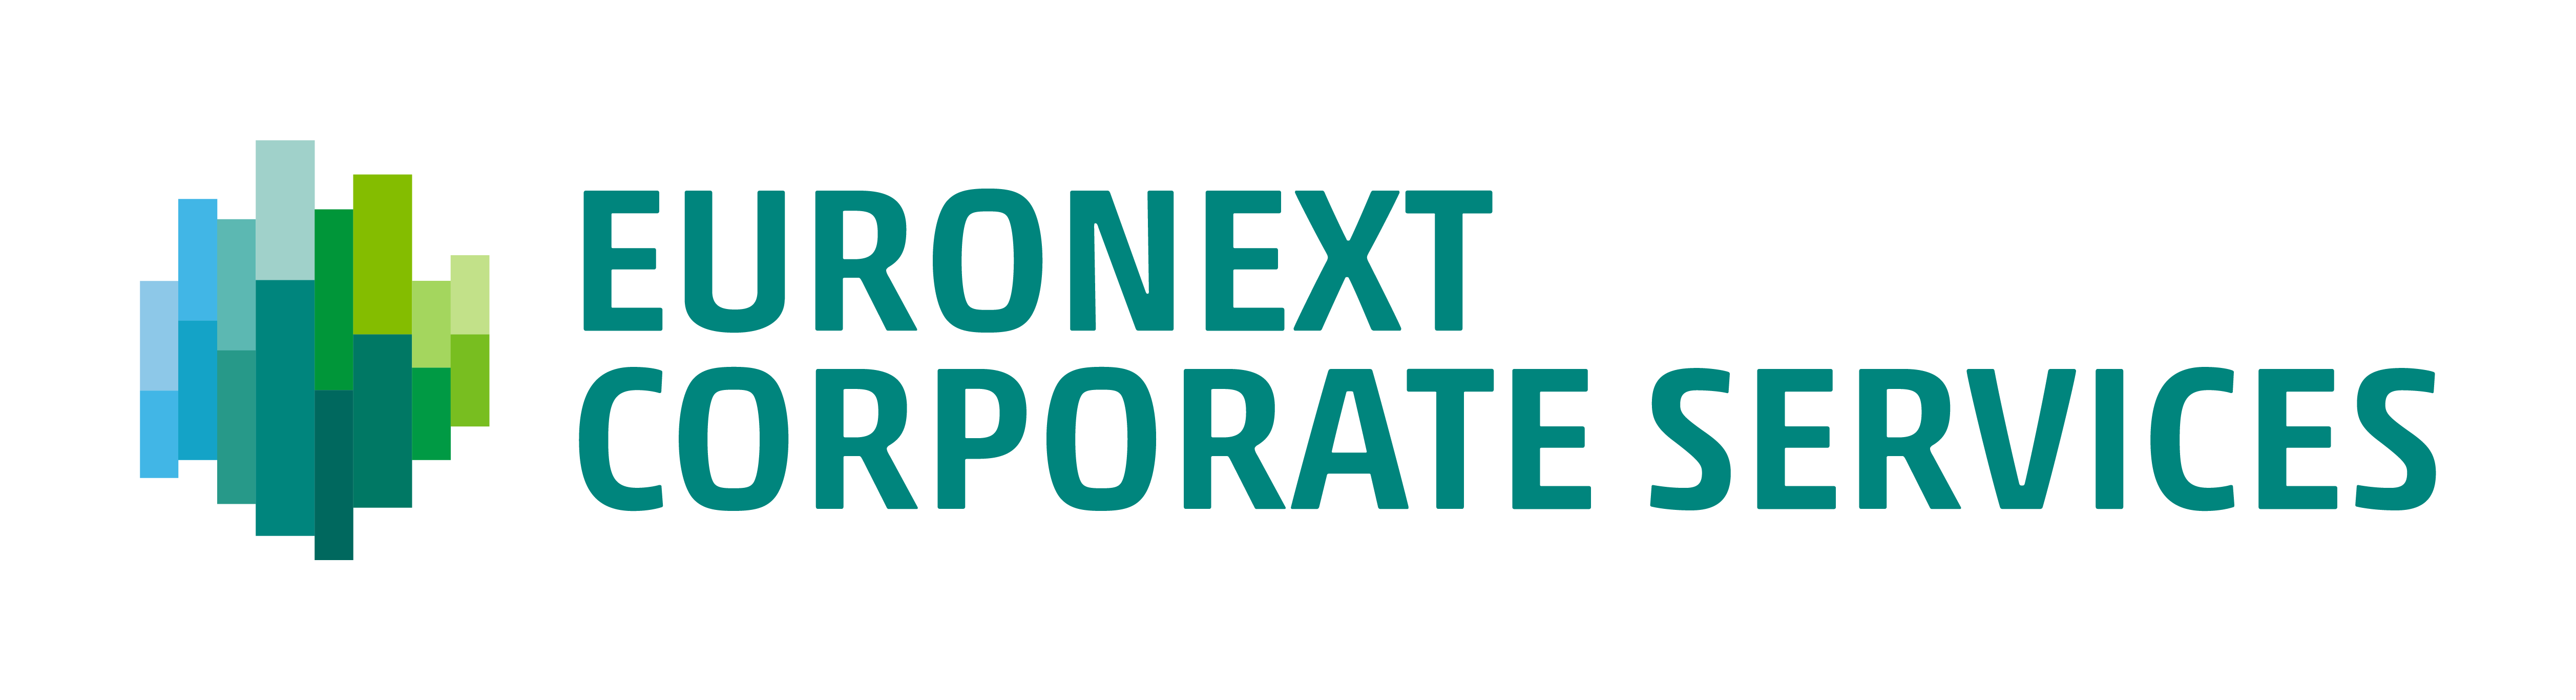 Euronext Corporate Services logo